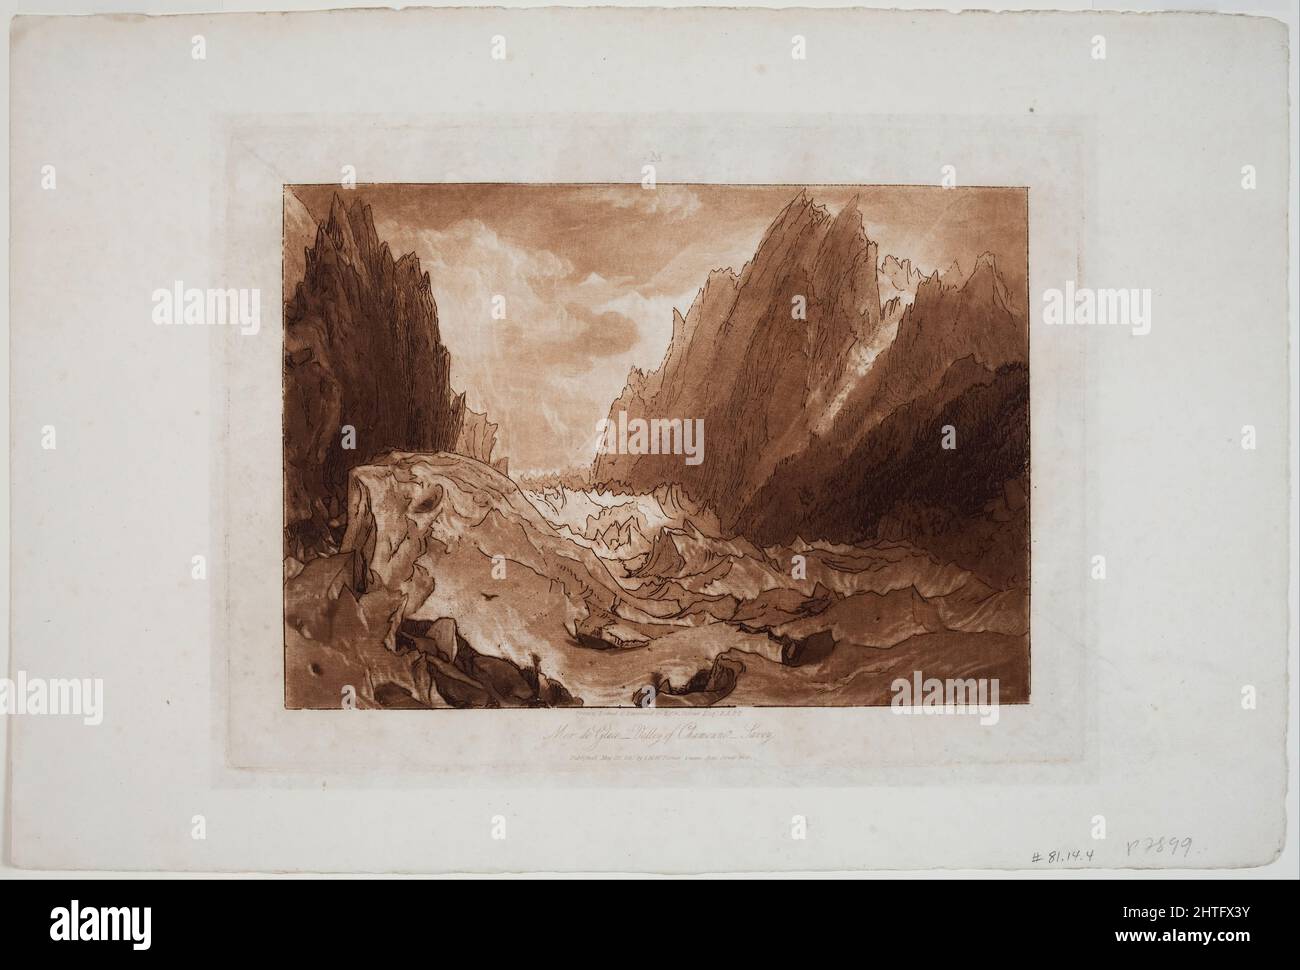 Joseph Mallord William Turner - Mer de Glace - Valley of Chamonix - Savoy, from the Liber Studiorum Stock Photo